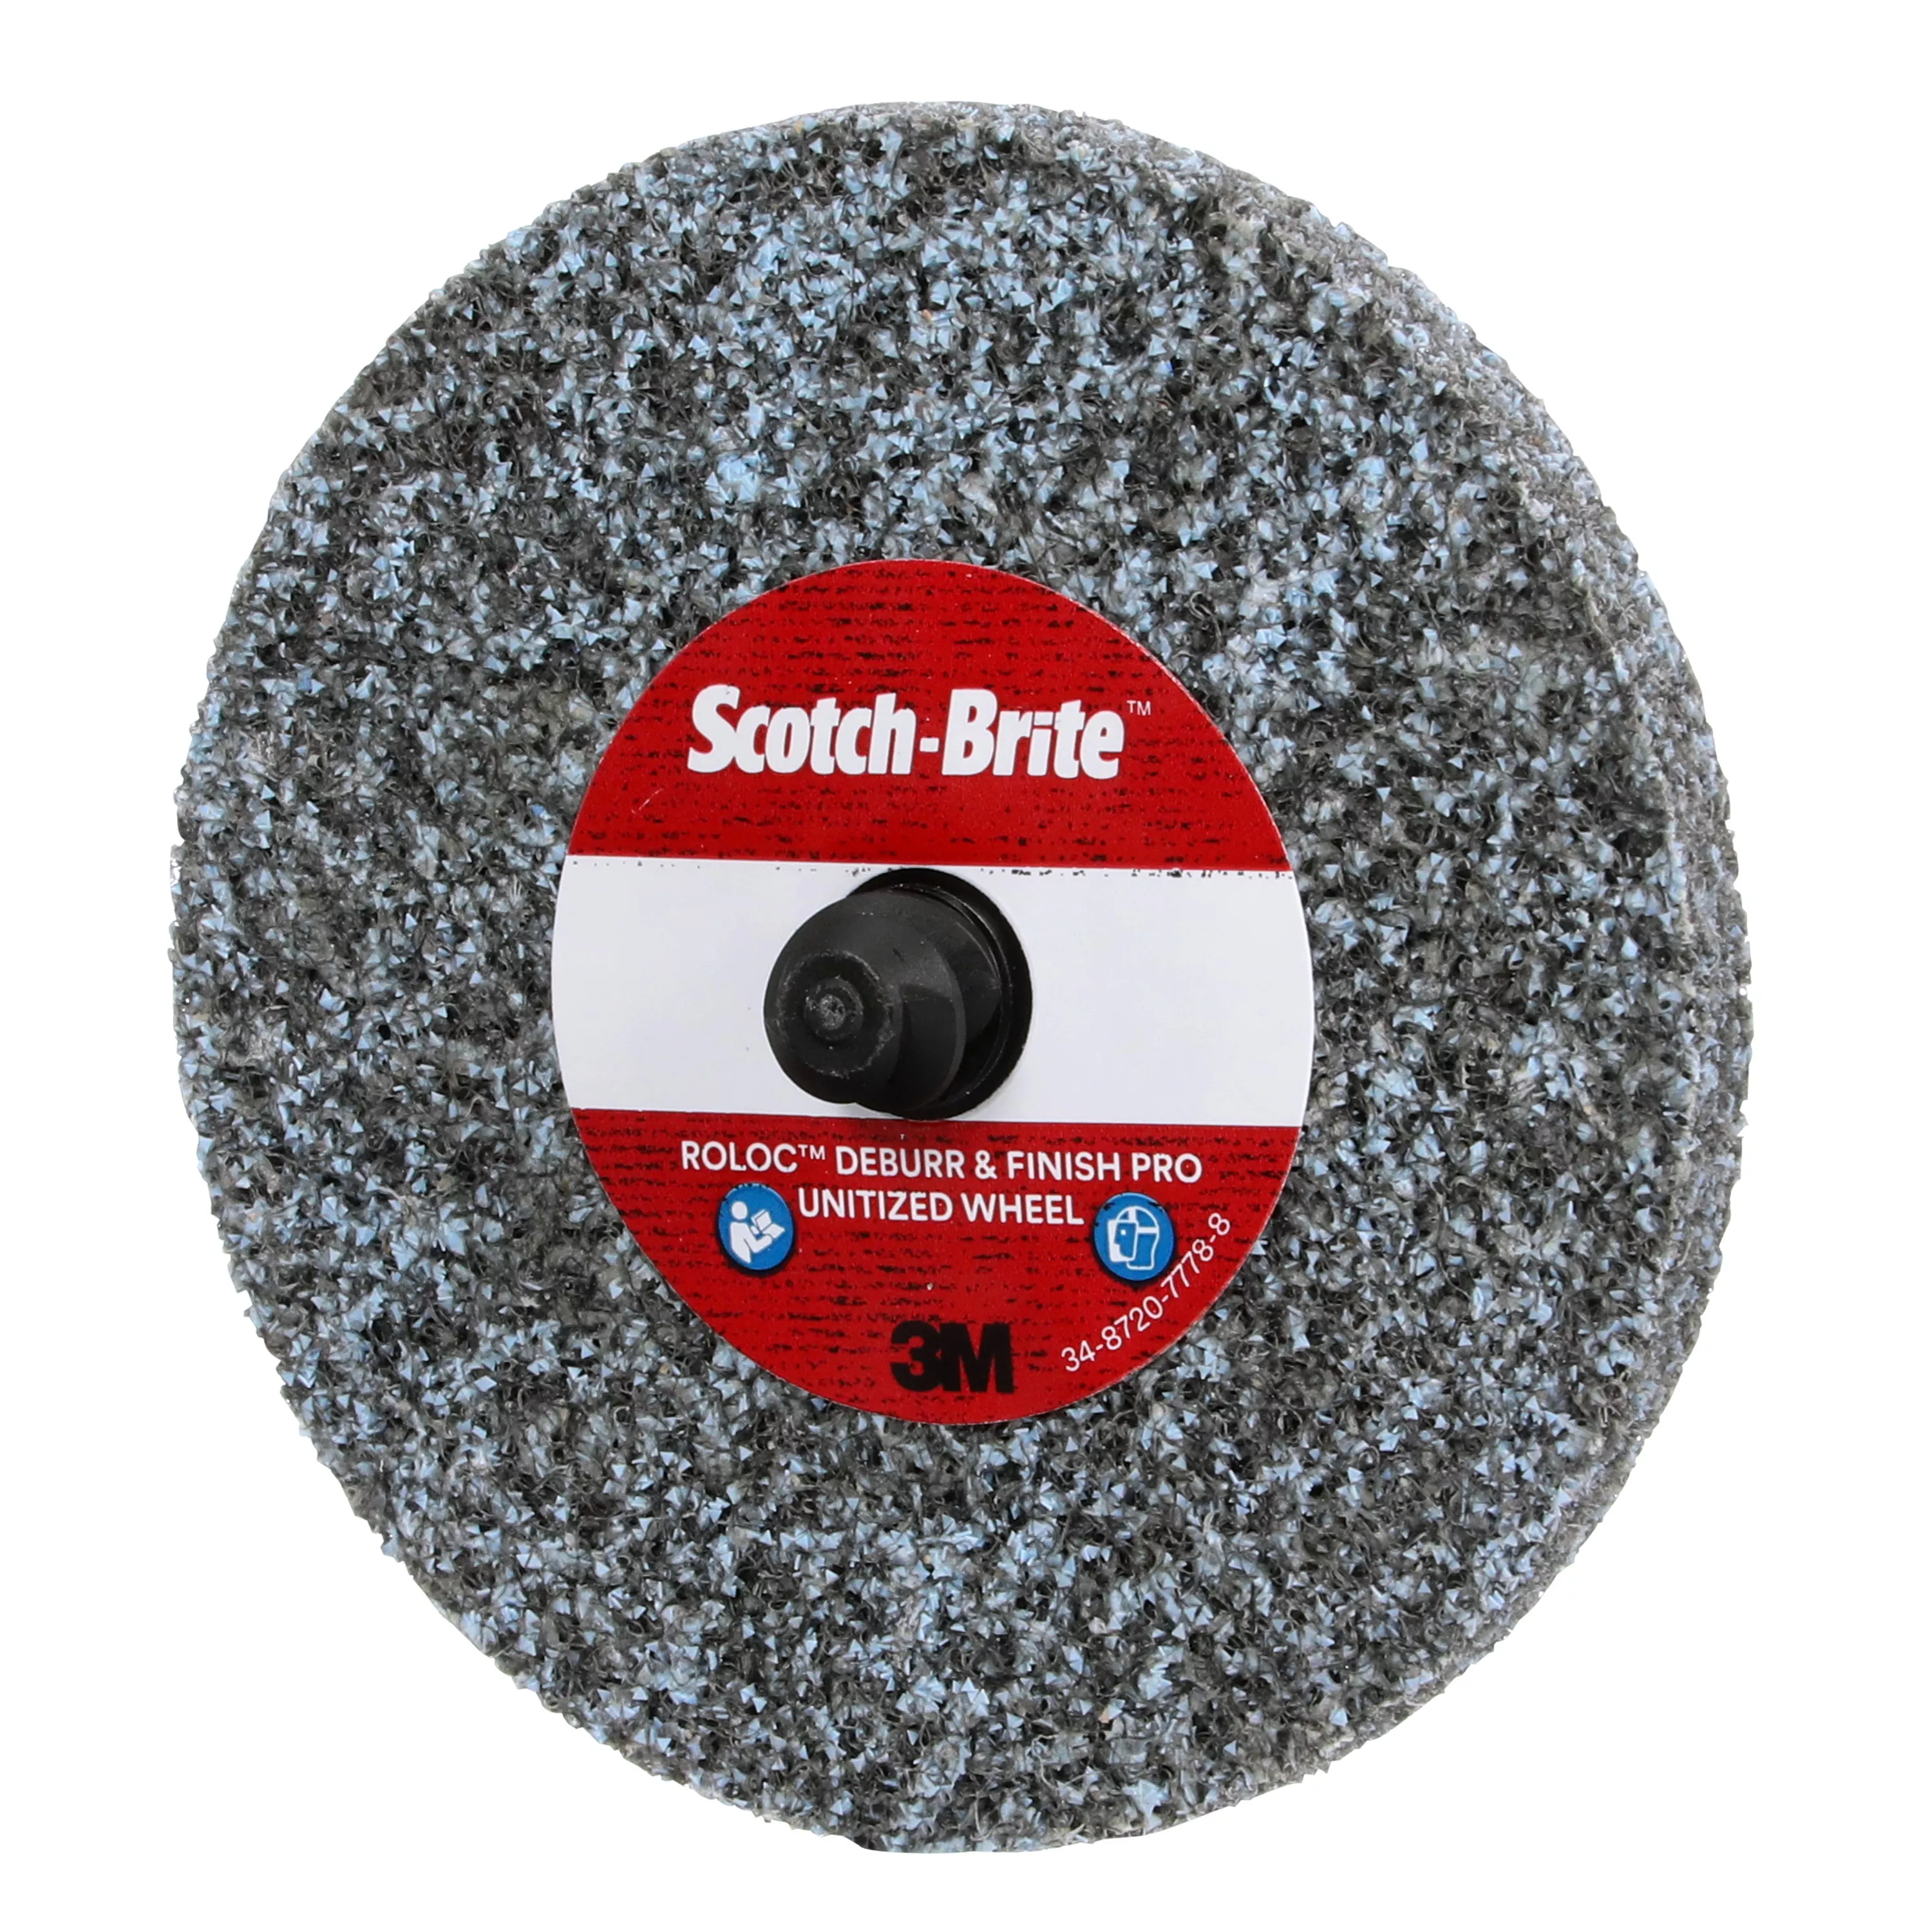 SKU 7100291543 | Scotch-Brite™ Roloc™ Deburr & Finish PRO Unitized Wheel